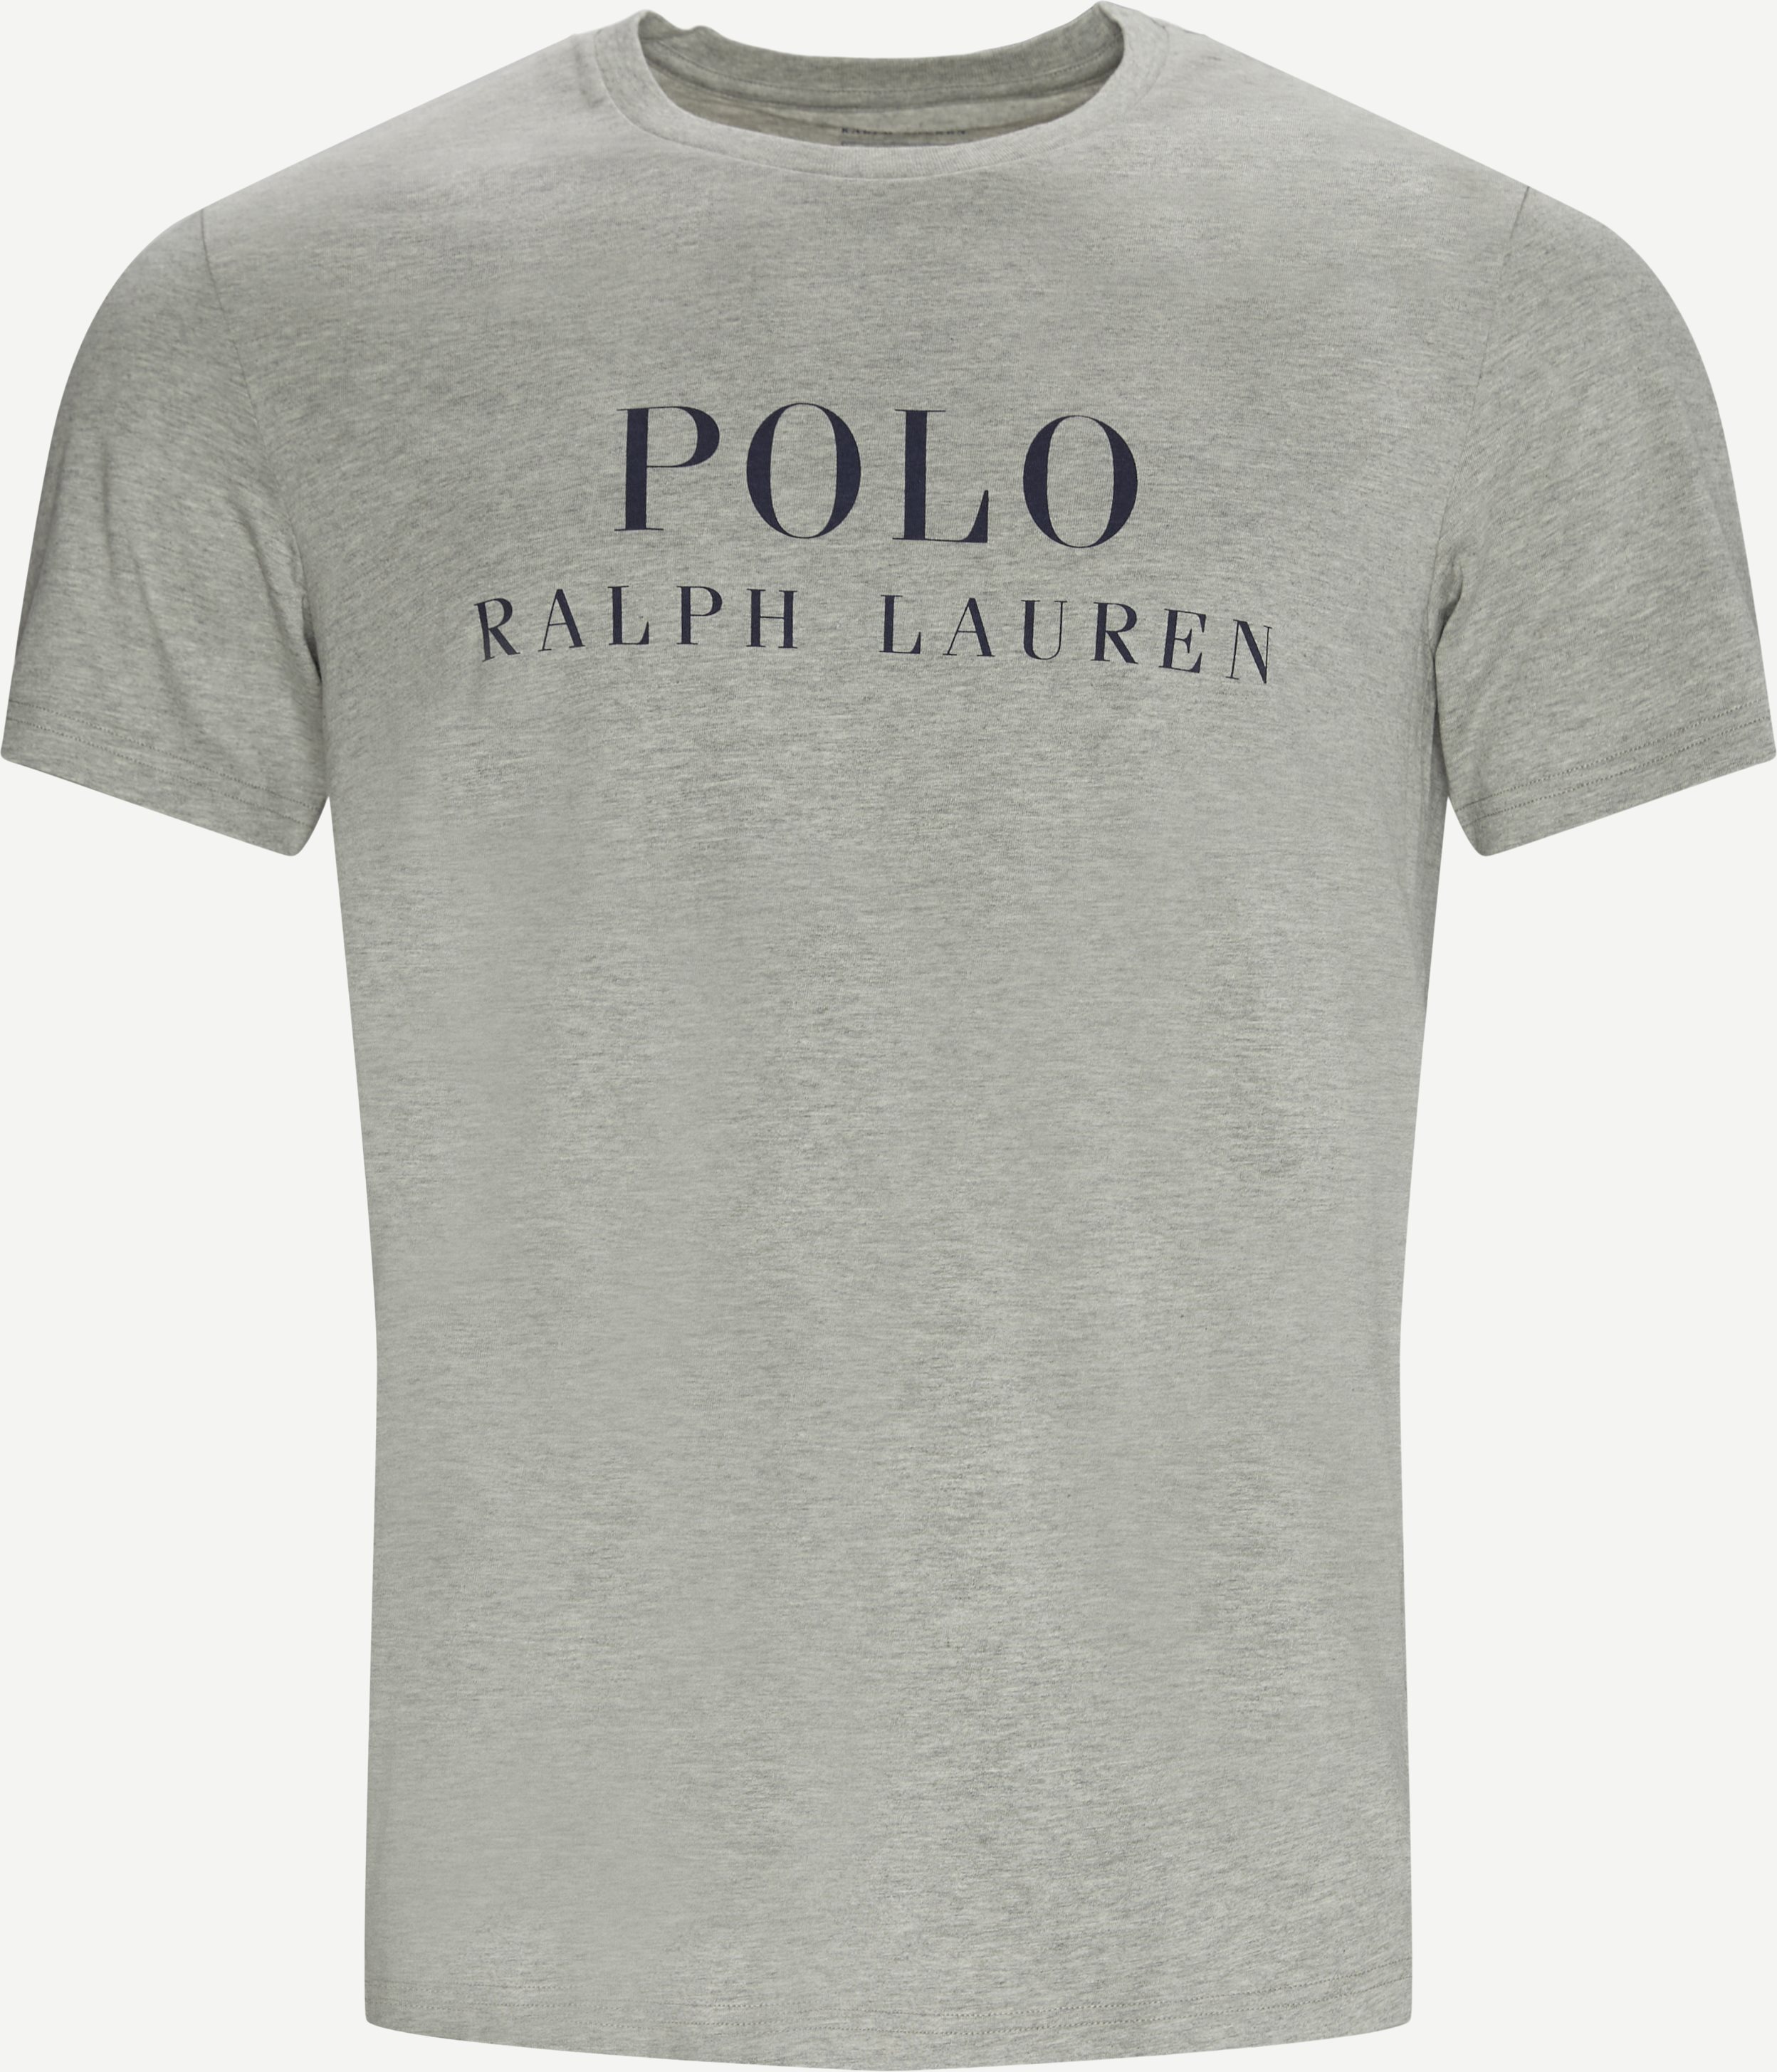 Polo Ralph Lauren T-shirts 714830278. Grey